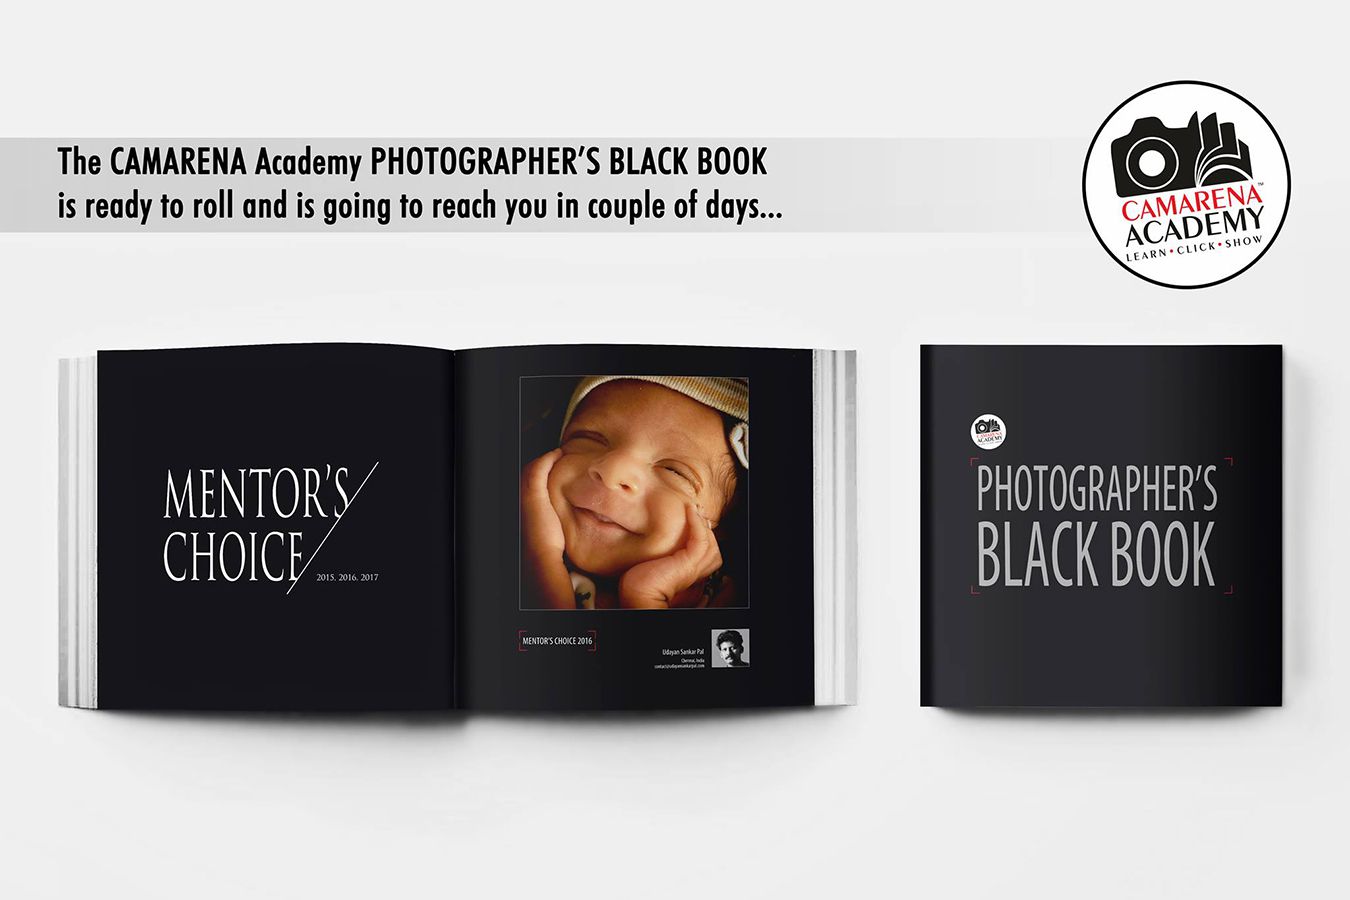 Camarena Academy Photographer’s Black Book